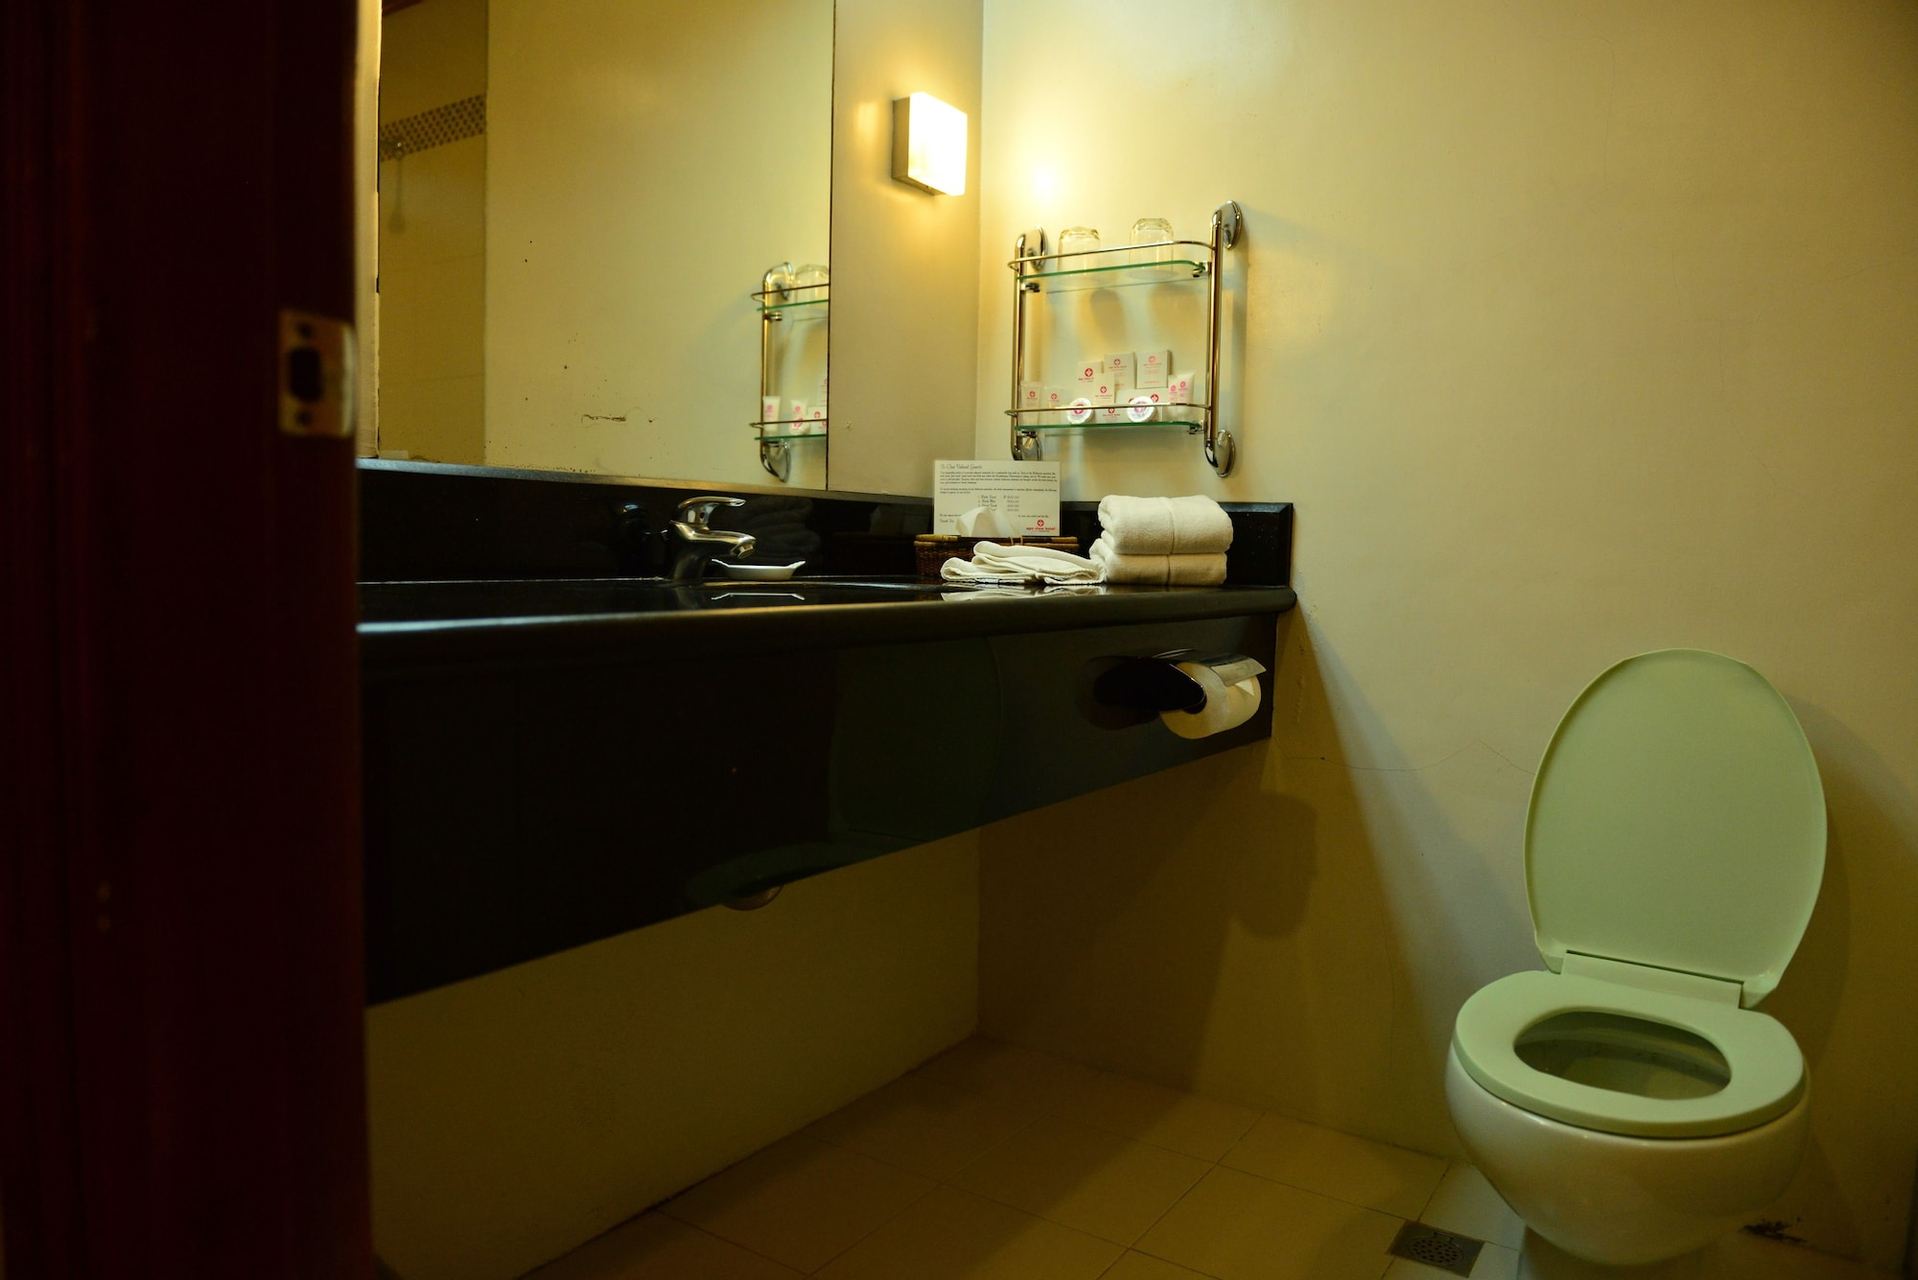 Bedroom 4, The Apo View Hotel, Davao City